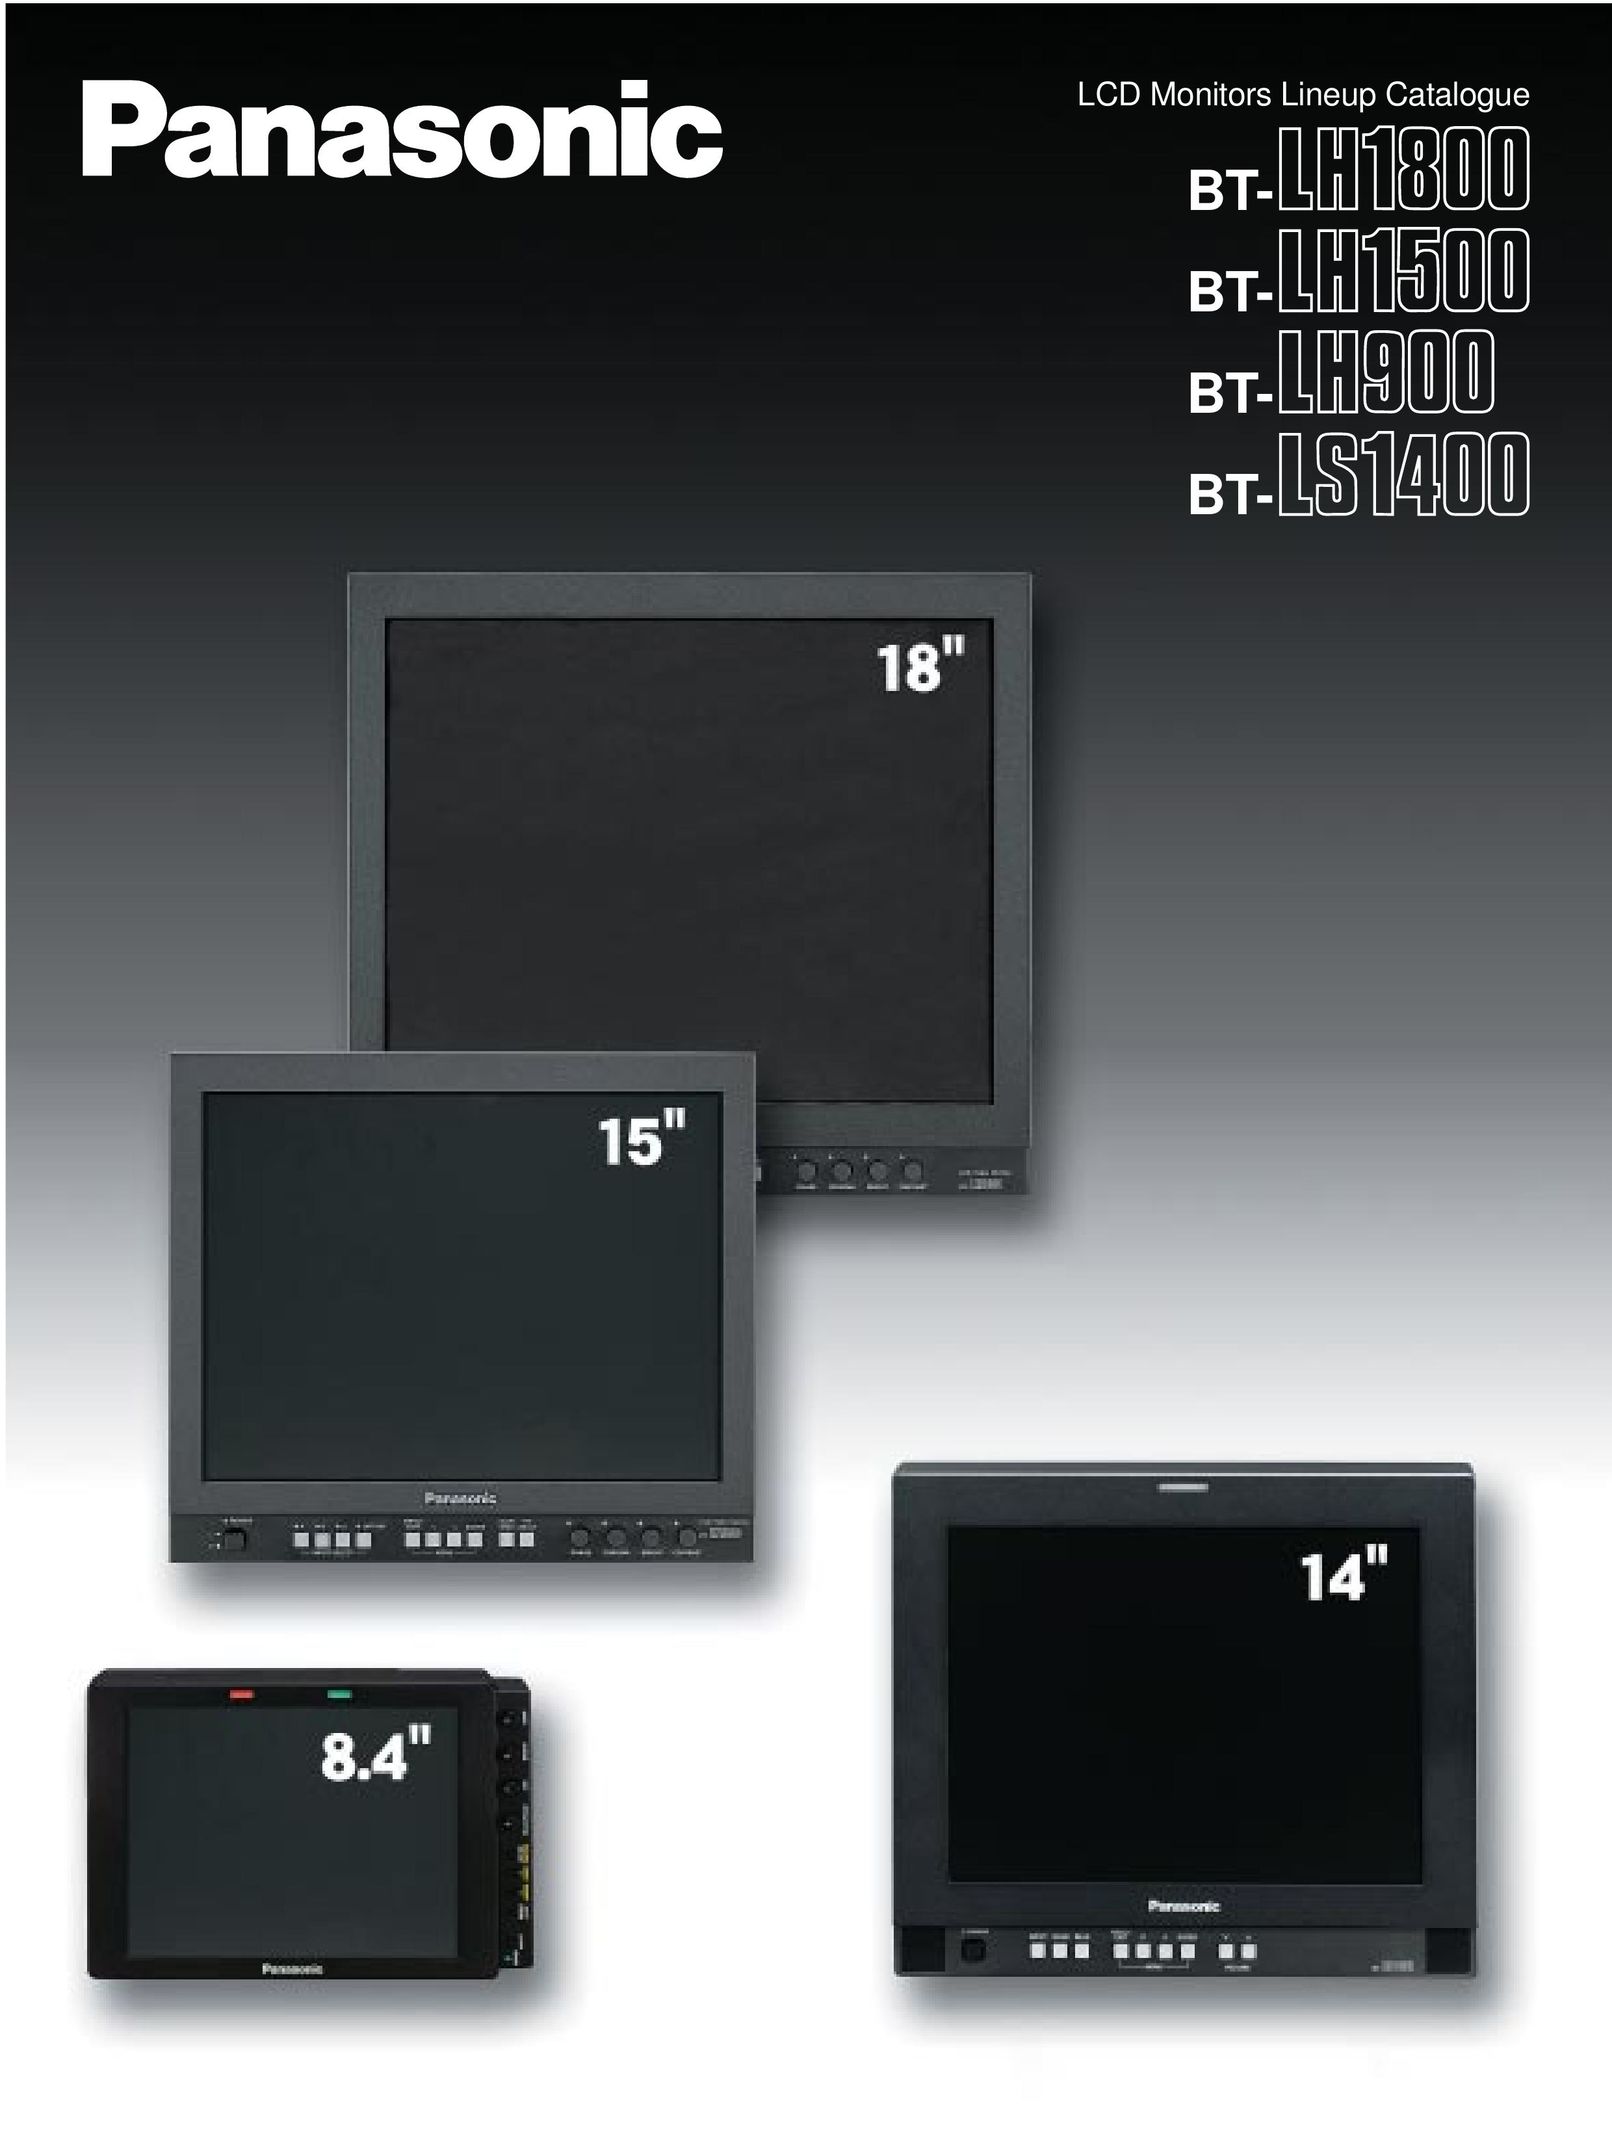 Panasonic BT-LH900 Computer Monitor User Manual